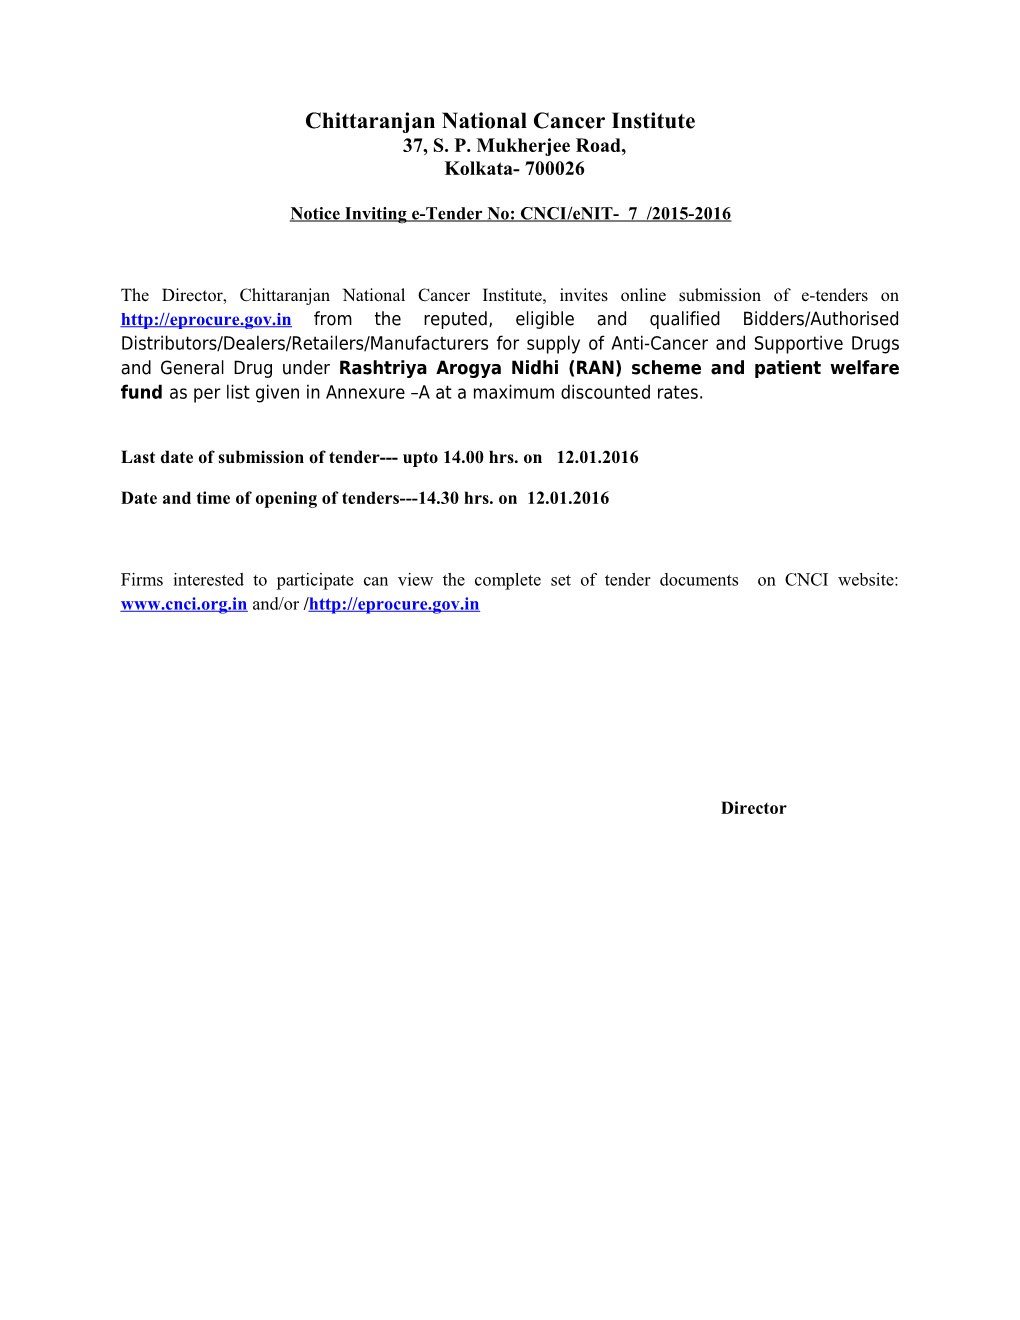 Notice Inviting E-Tender No: CNCI/Enit- 7 /2015-2016